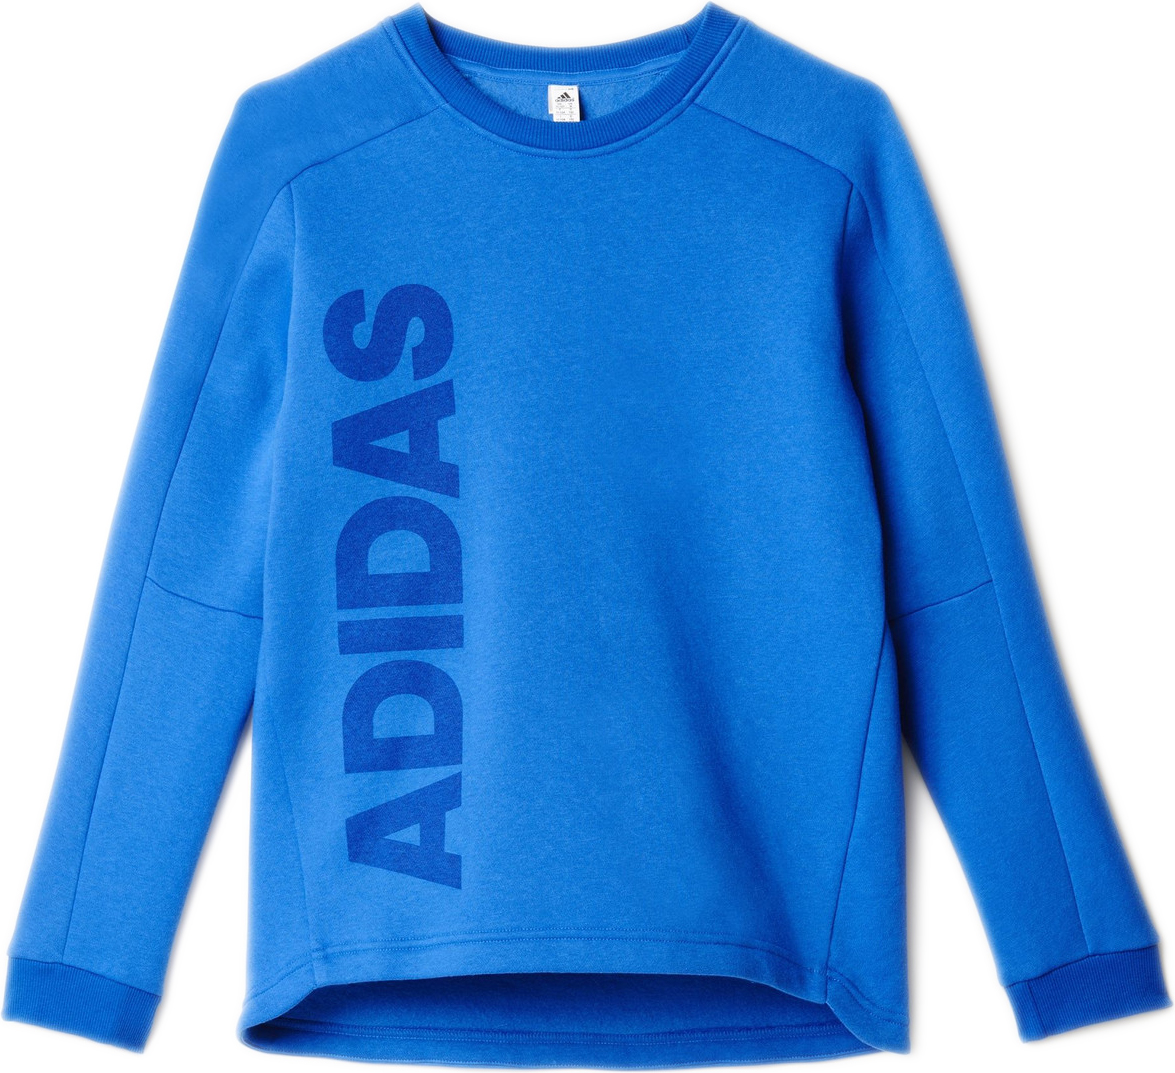 Свитшот для мальчика Adidas Yb Aa Crew, цвет: синий. AX6426. Размер 128